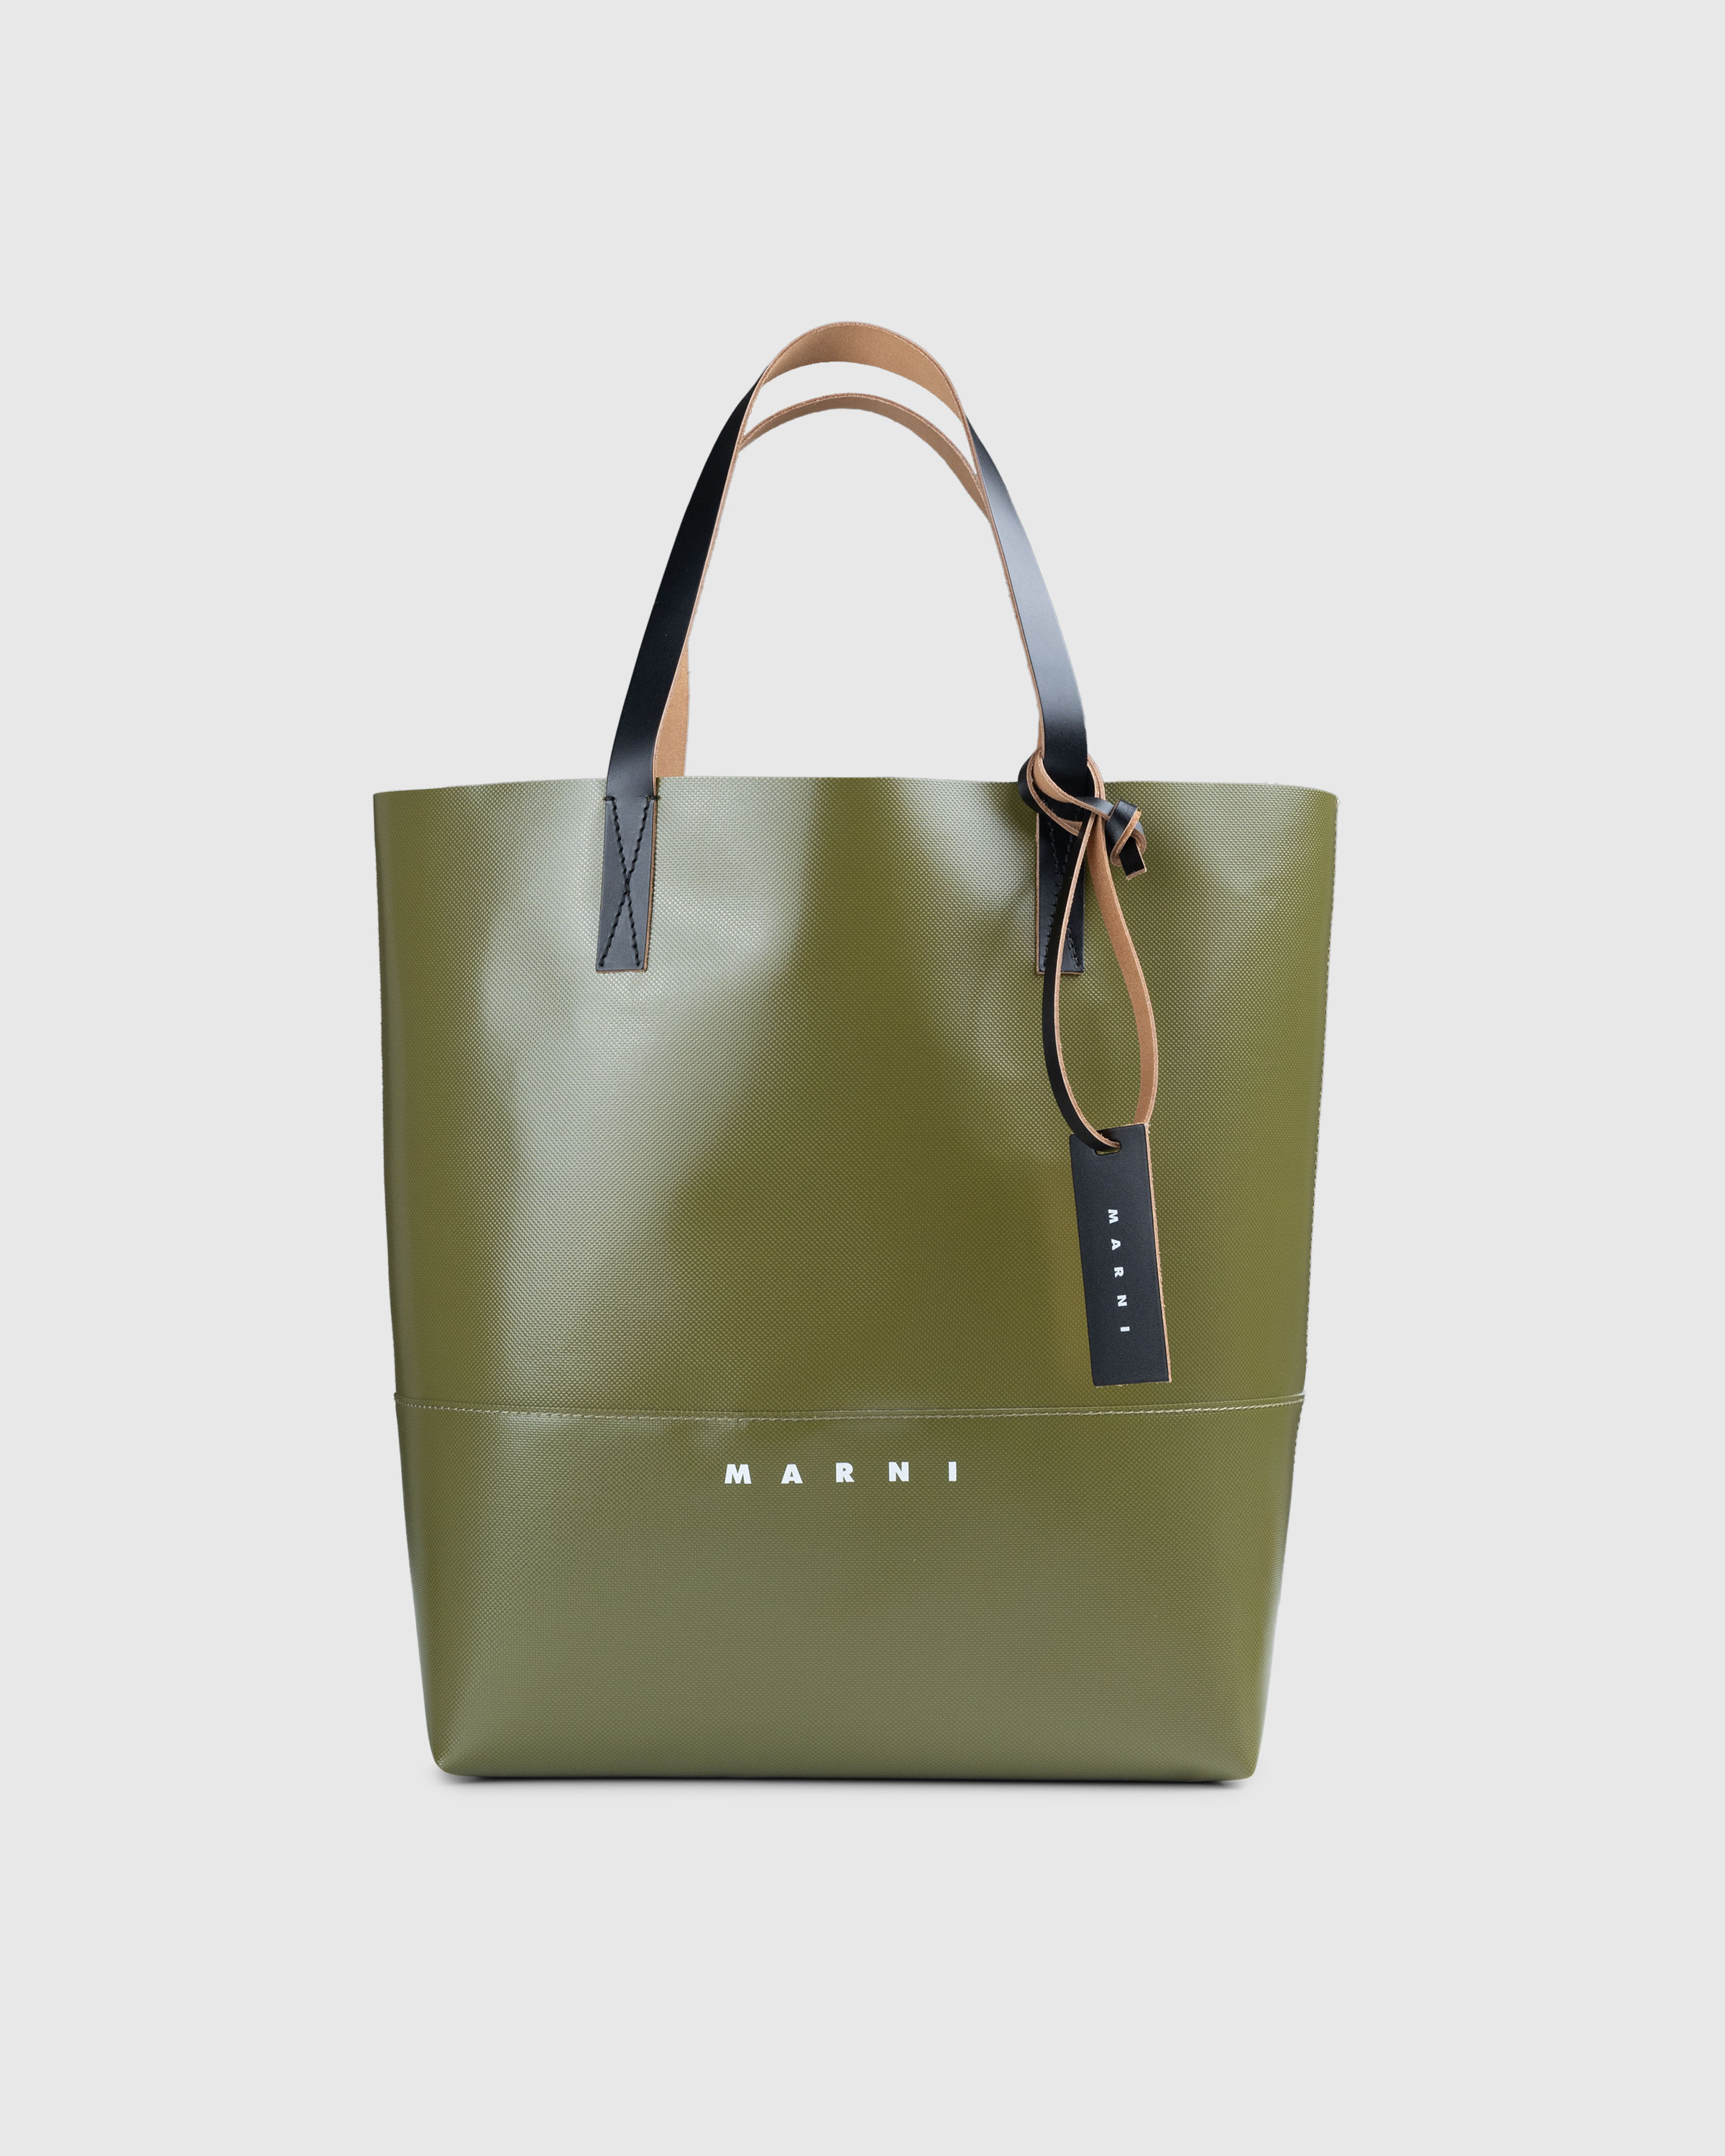 Marni - Tote Bag Olive Green - Accessories - Green - Image 1